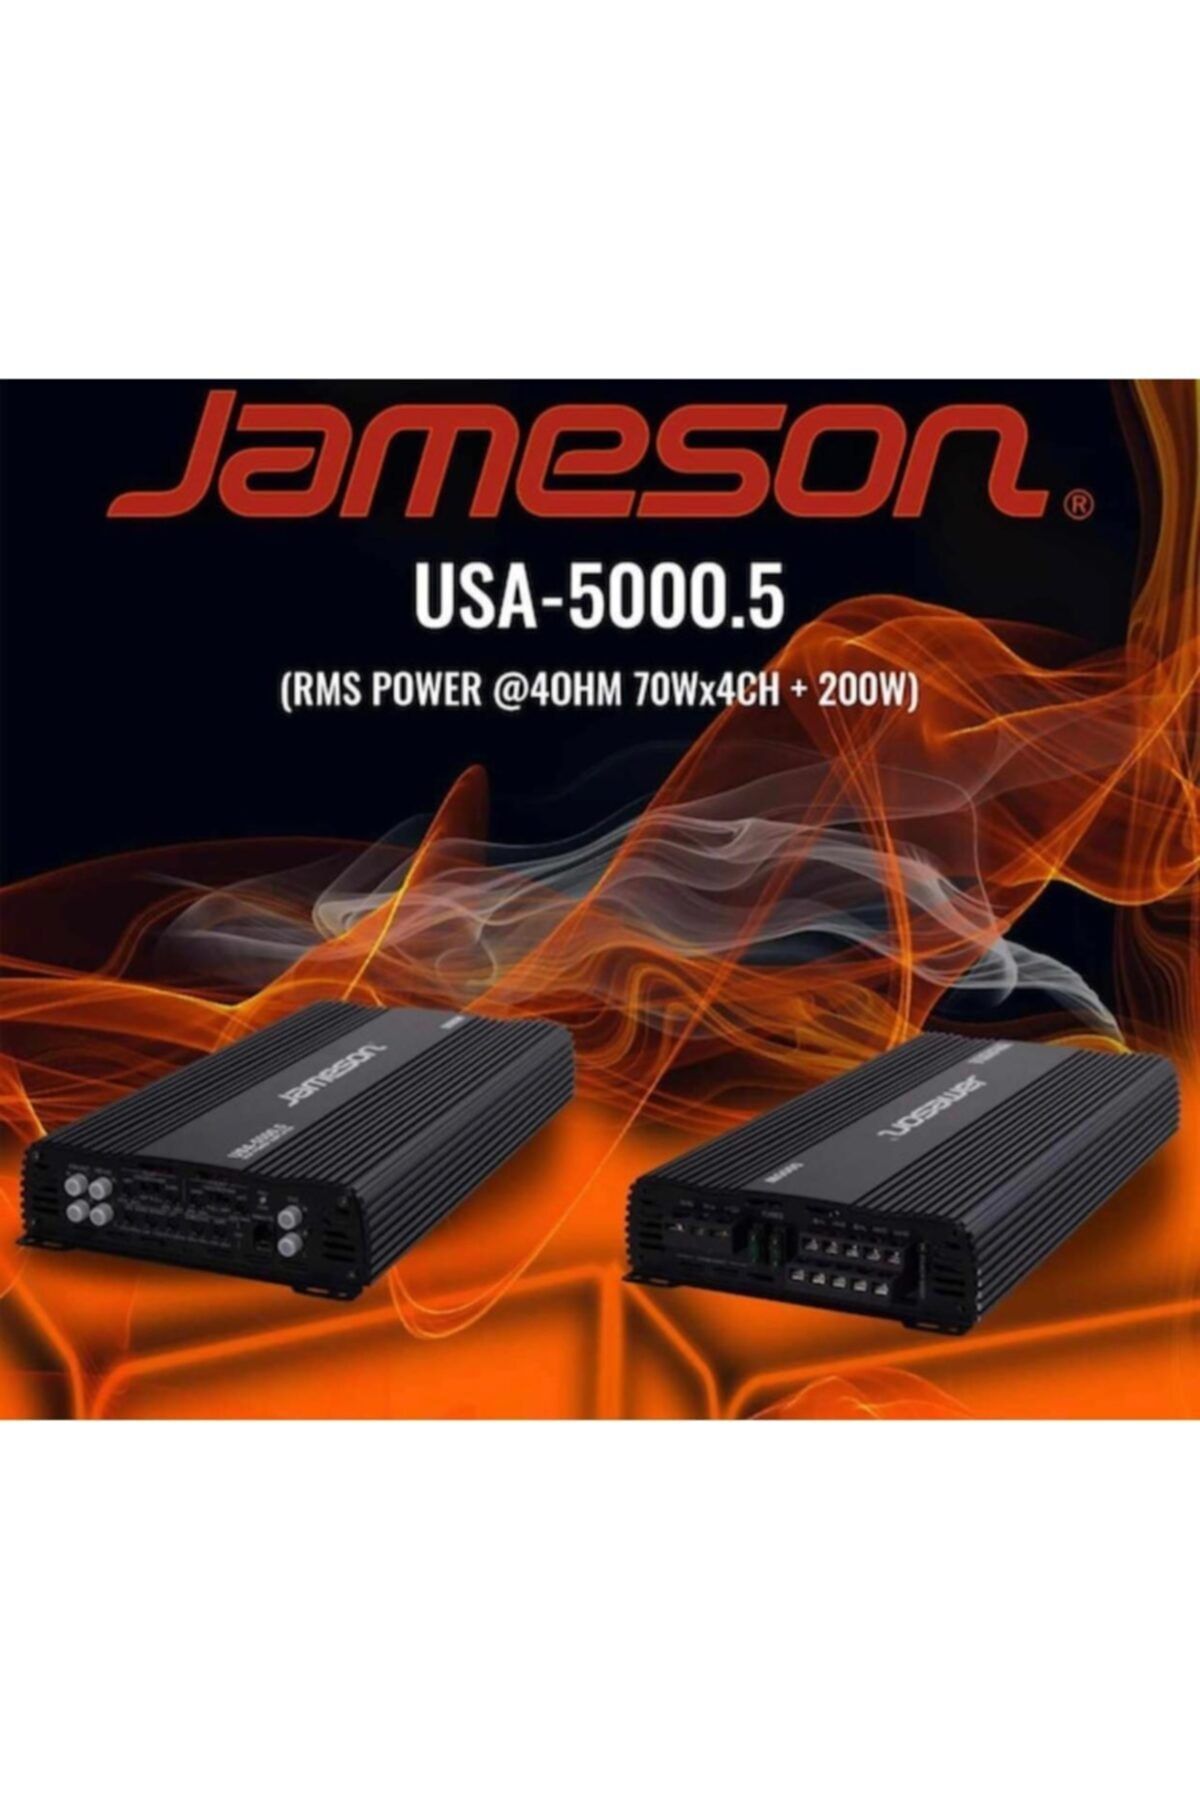 Jameson Usa-5000.5 Profesyonel 5 Kanallı Anfi 4ohm70wx4ch+200w 2ohm 130wx4ch+